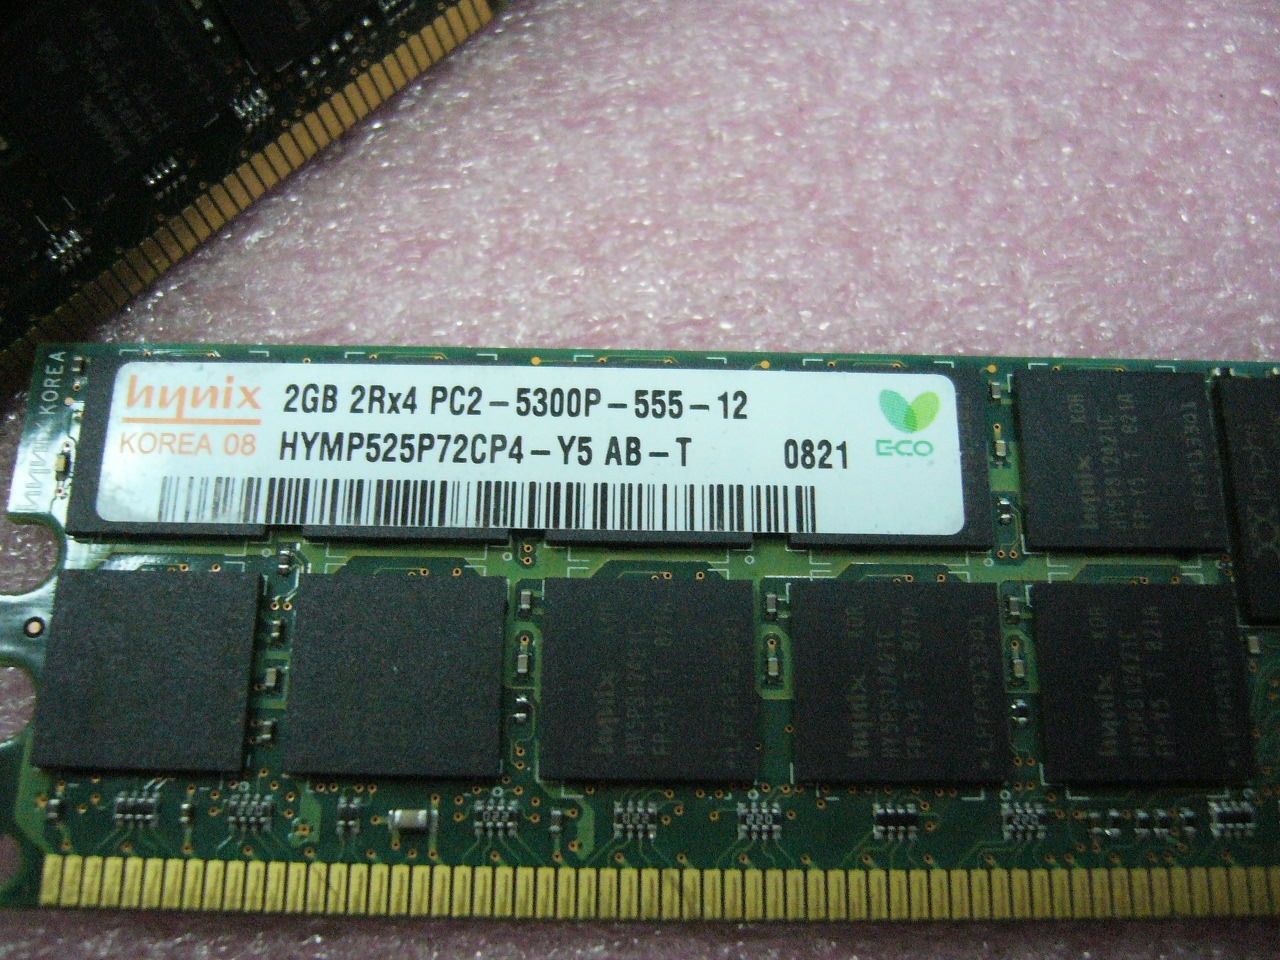 QTY 1x 2GB DDR2 PC2-5300P-555-12 2Rx4 ECC Registered Server memory Hynix - Click Image to Close